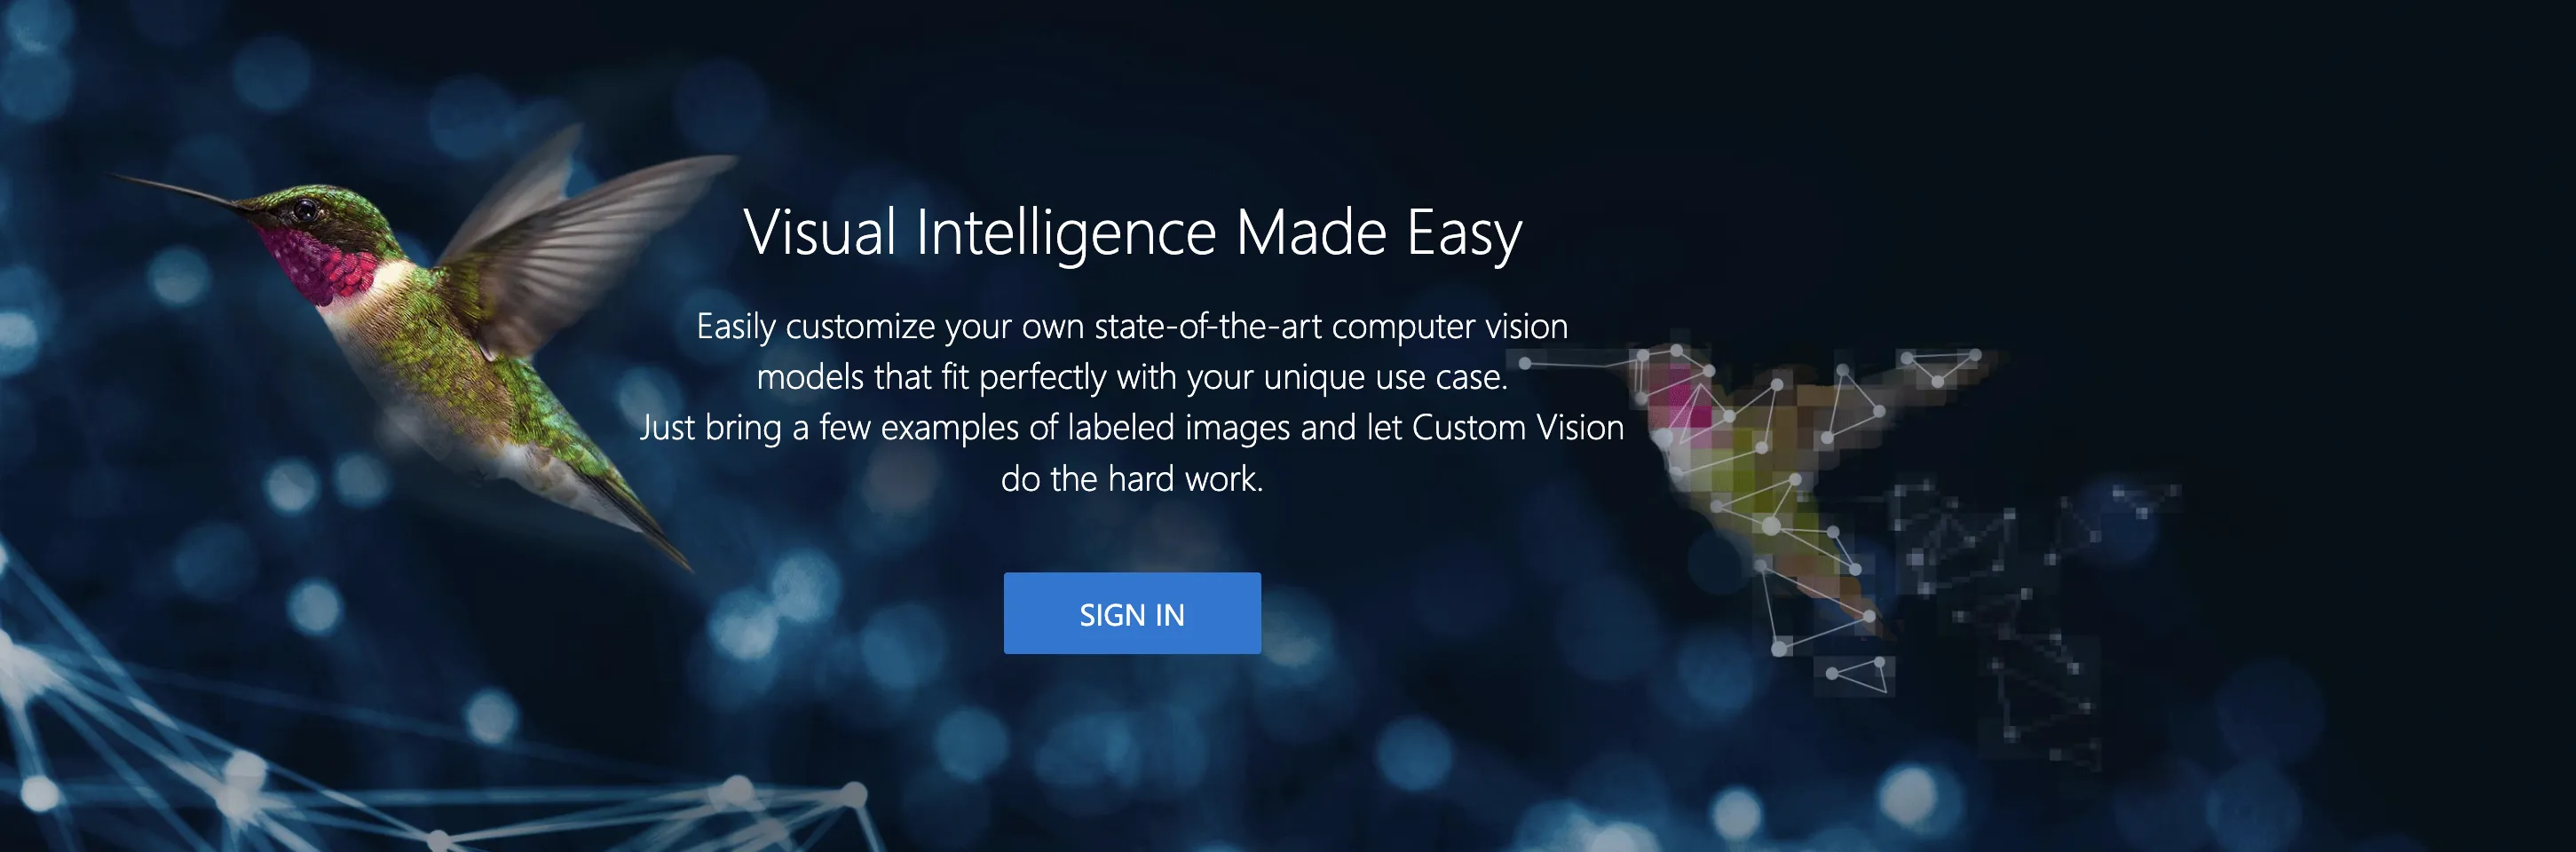 Custom VisionのWebページ